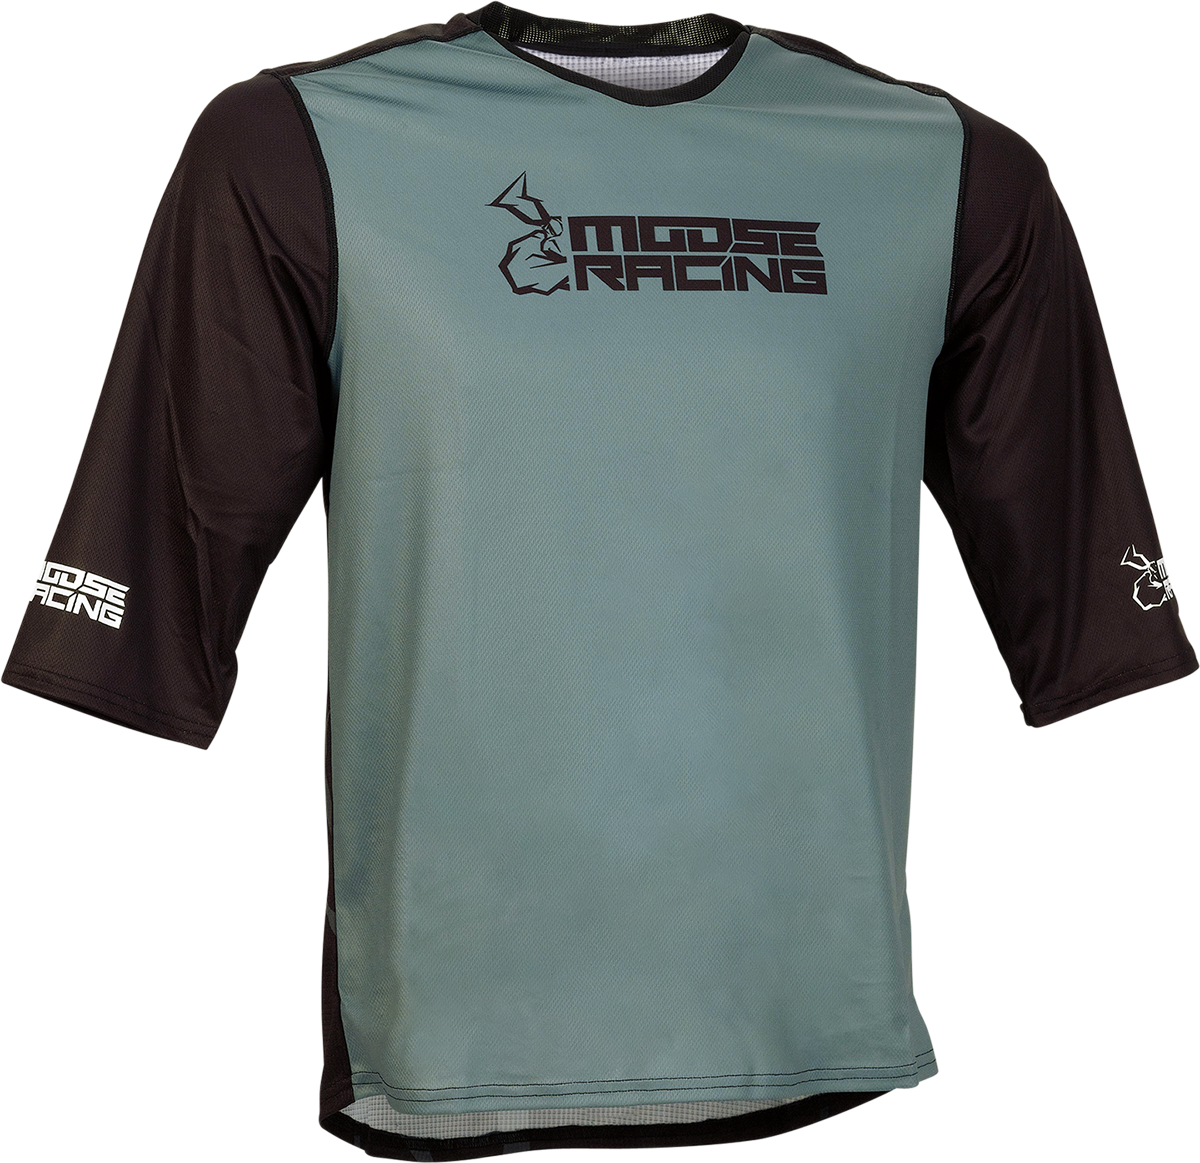 Camiseta MTB MOOSE RACING - Manga 3/4 - Negro - Mediano 5020-0239